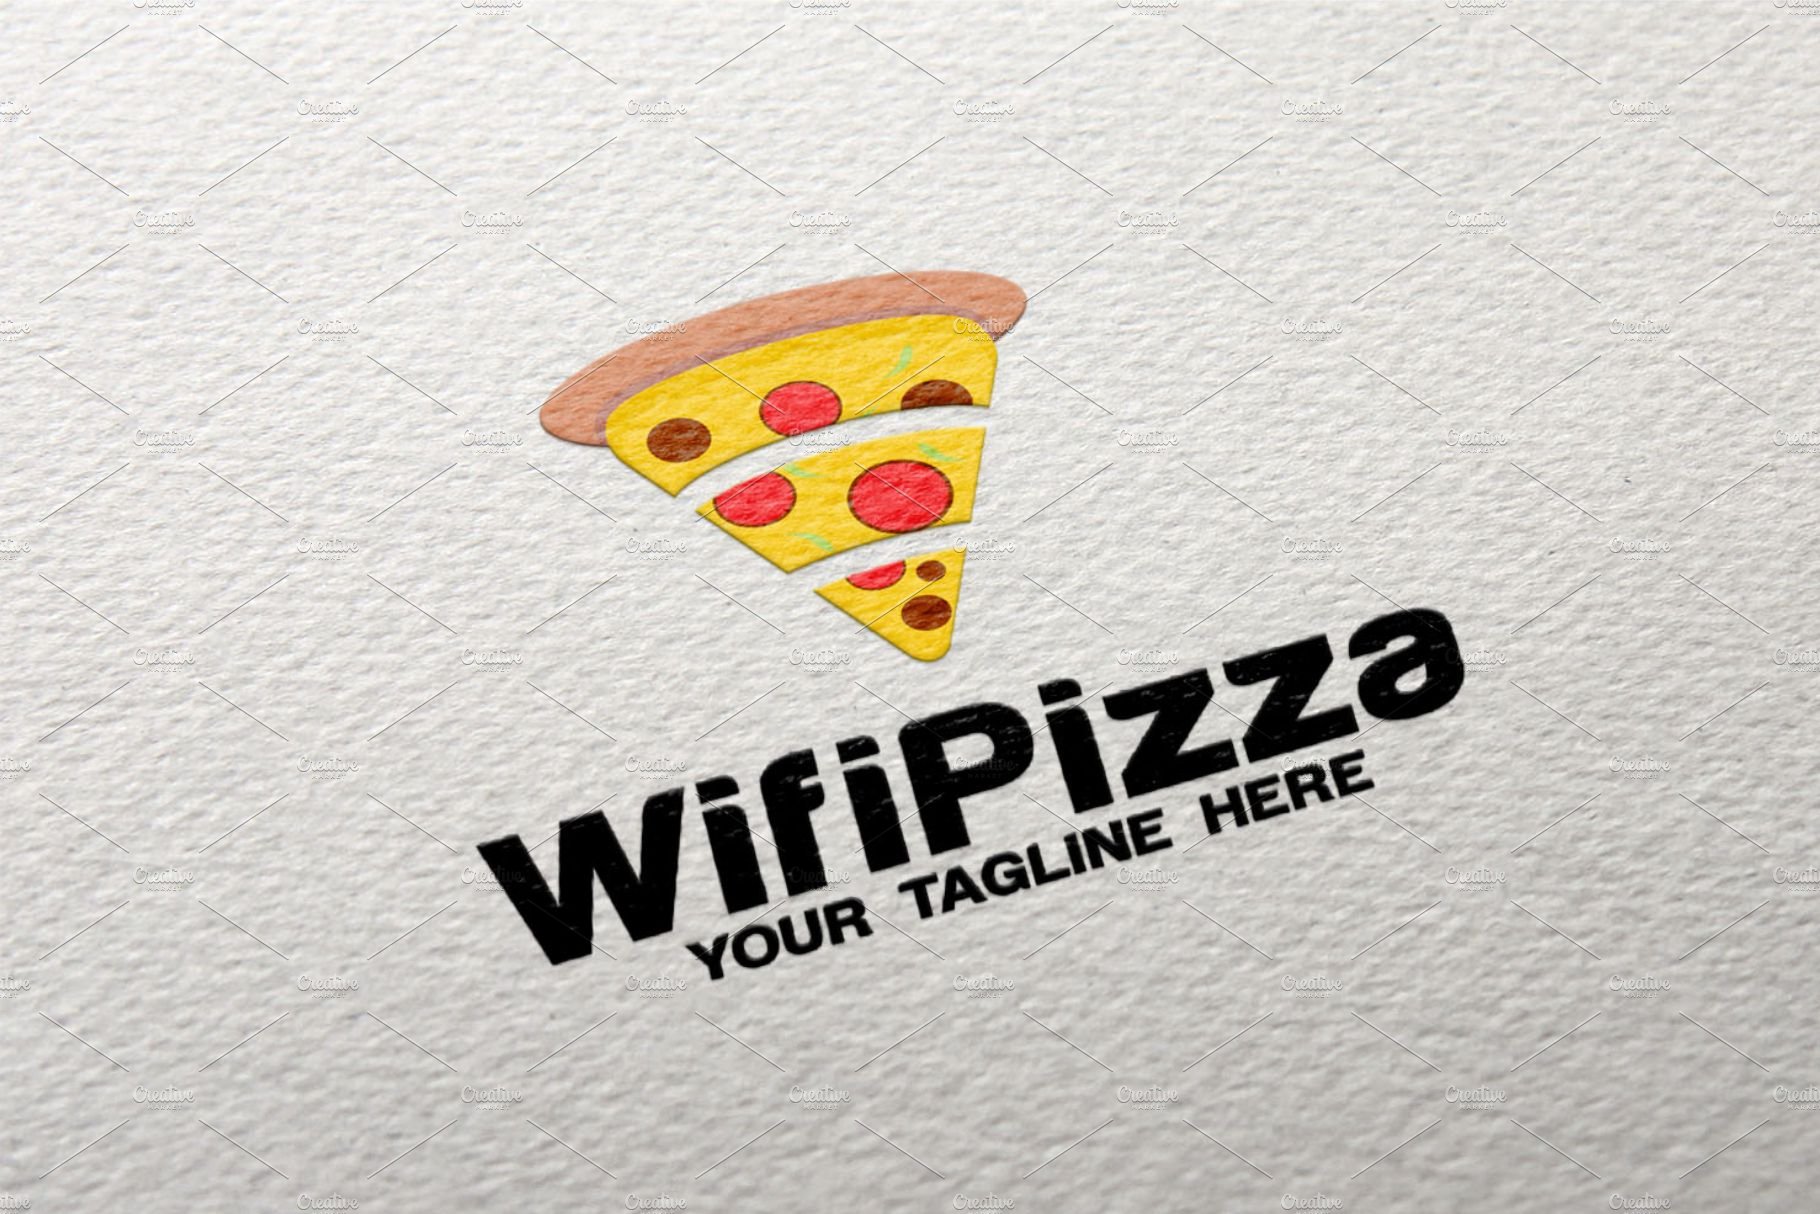 Wifi Pizza Logo cover image.